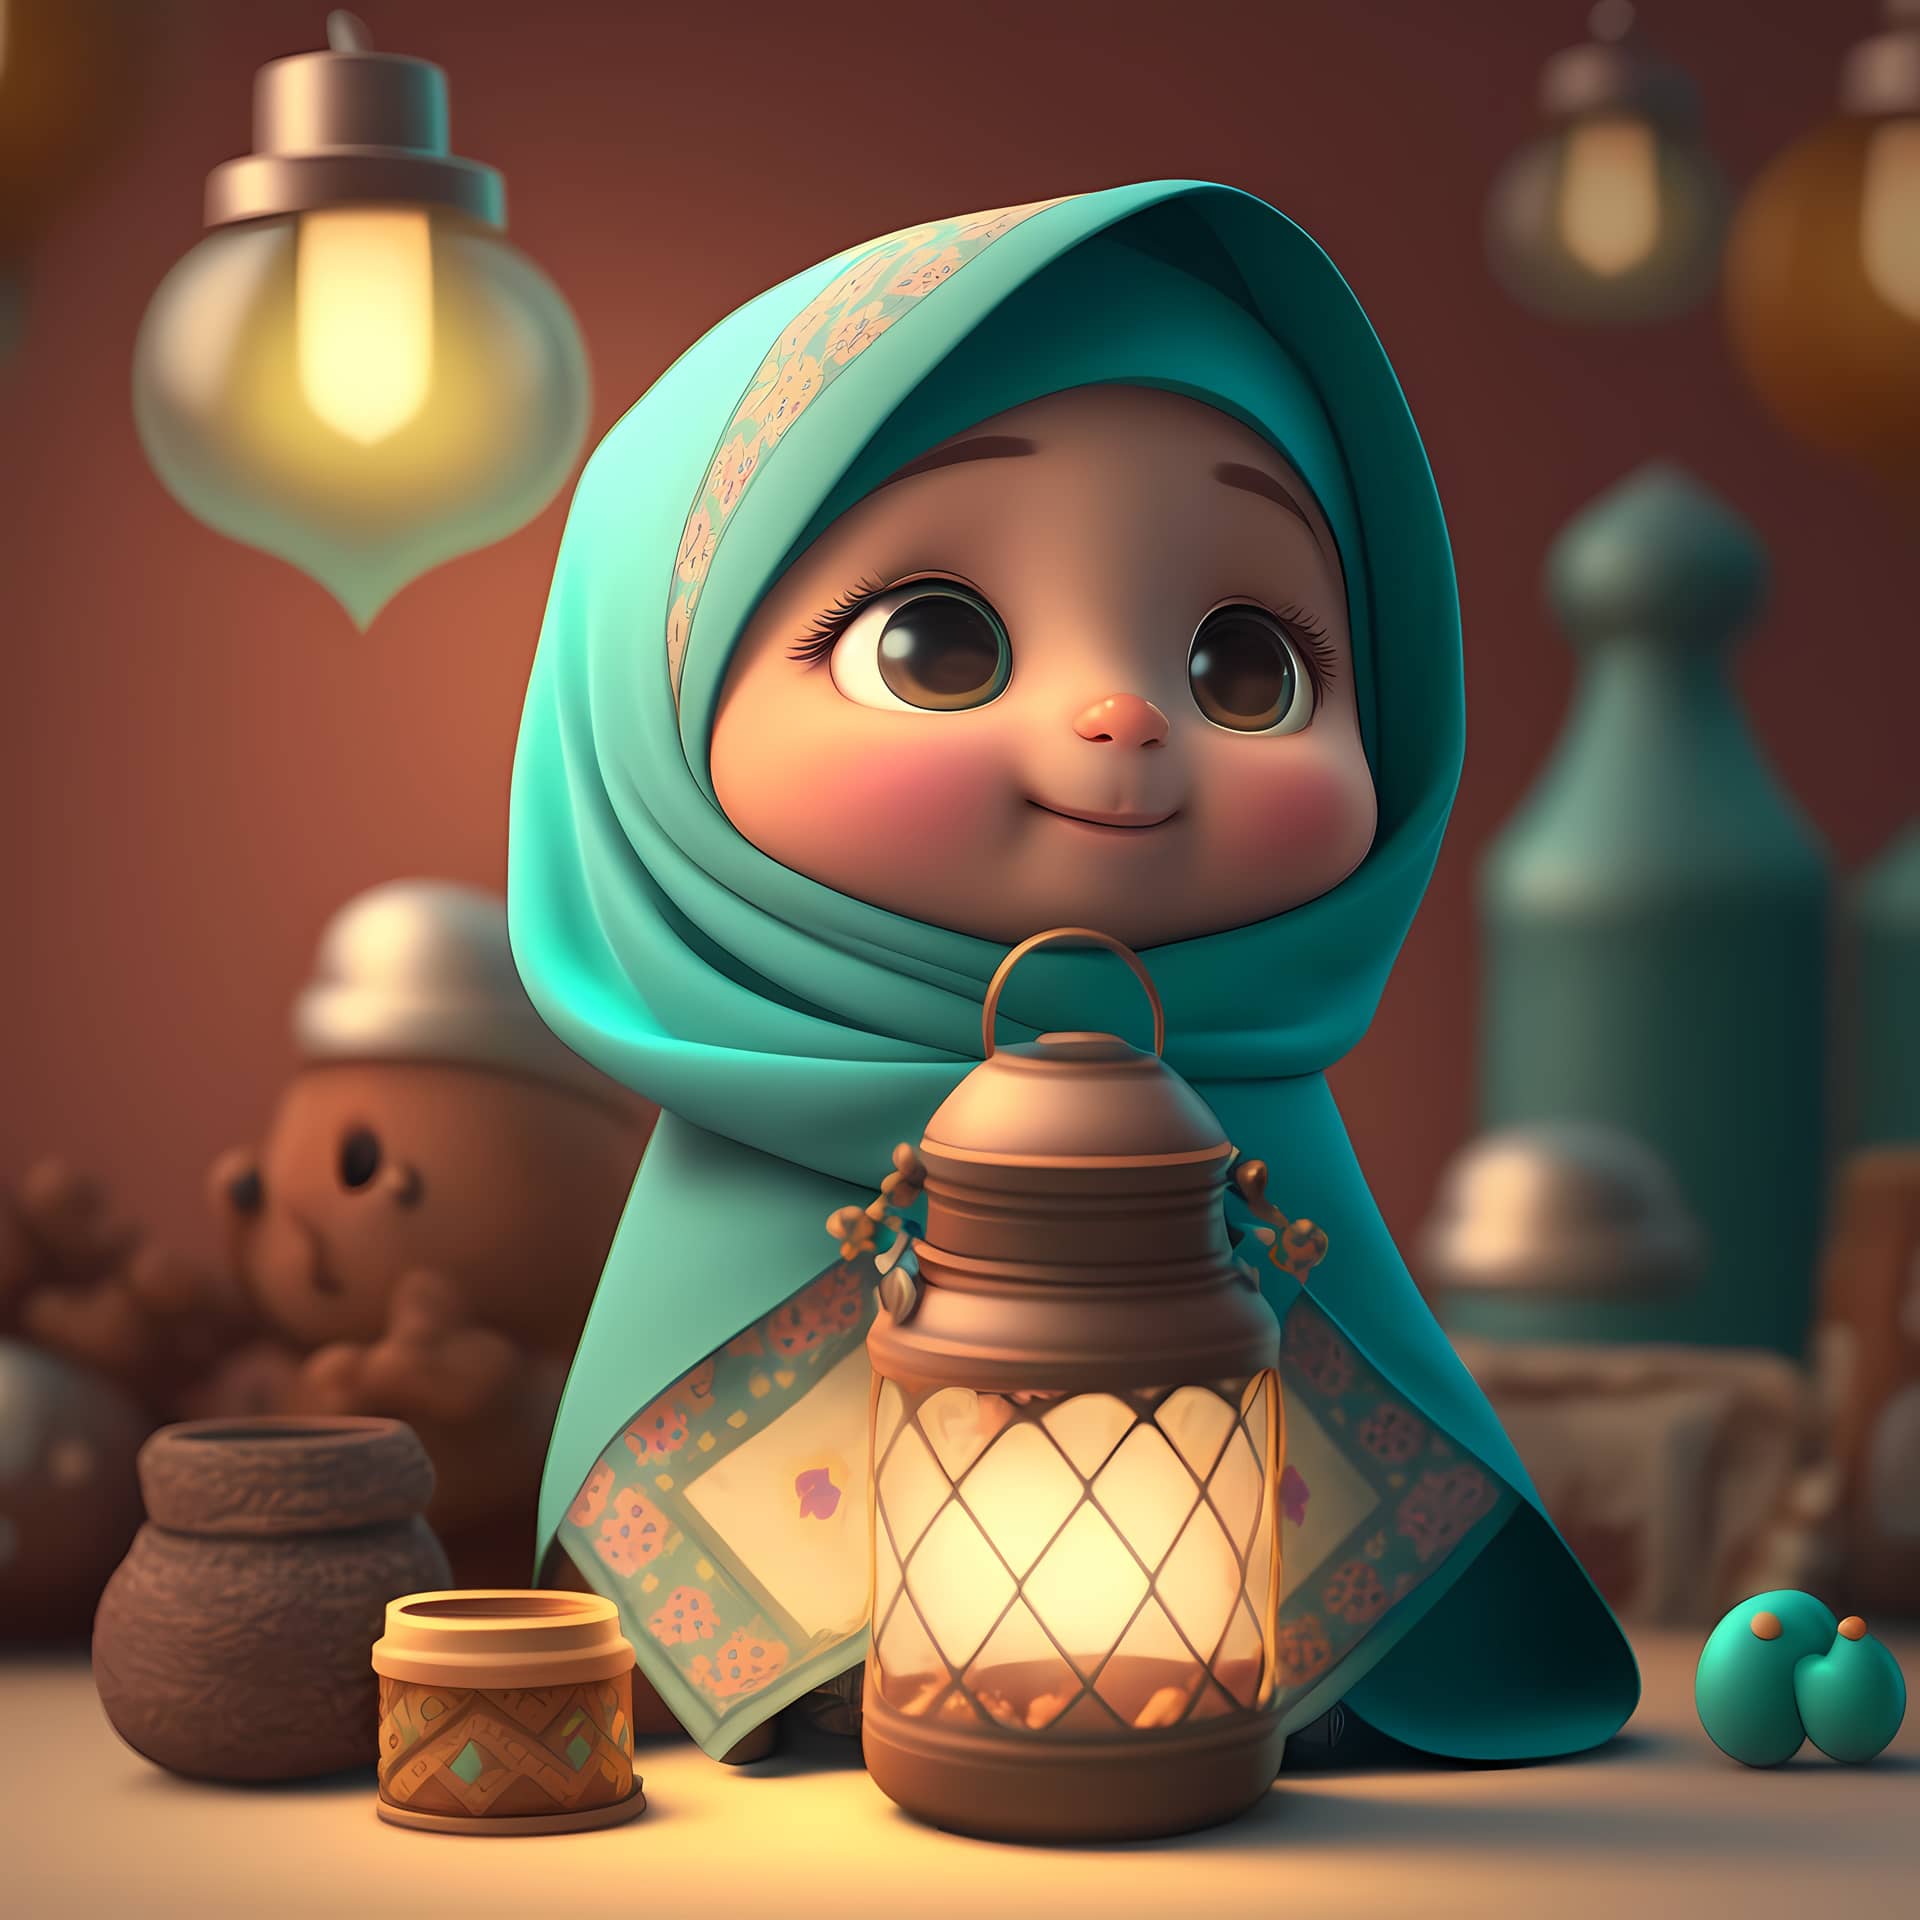 Adorable cute muslim children cartoon character 3d rendering